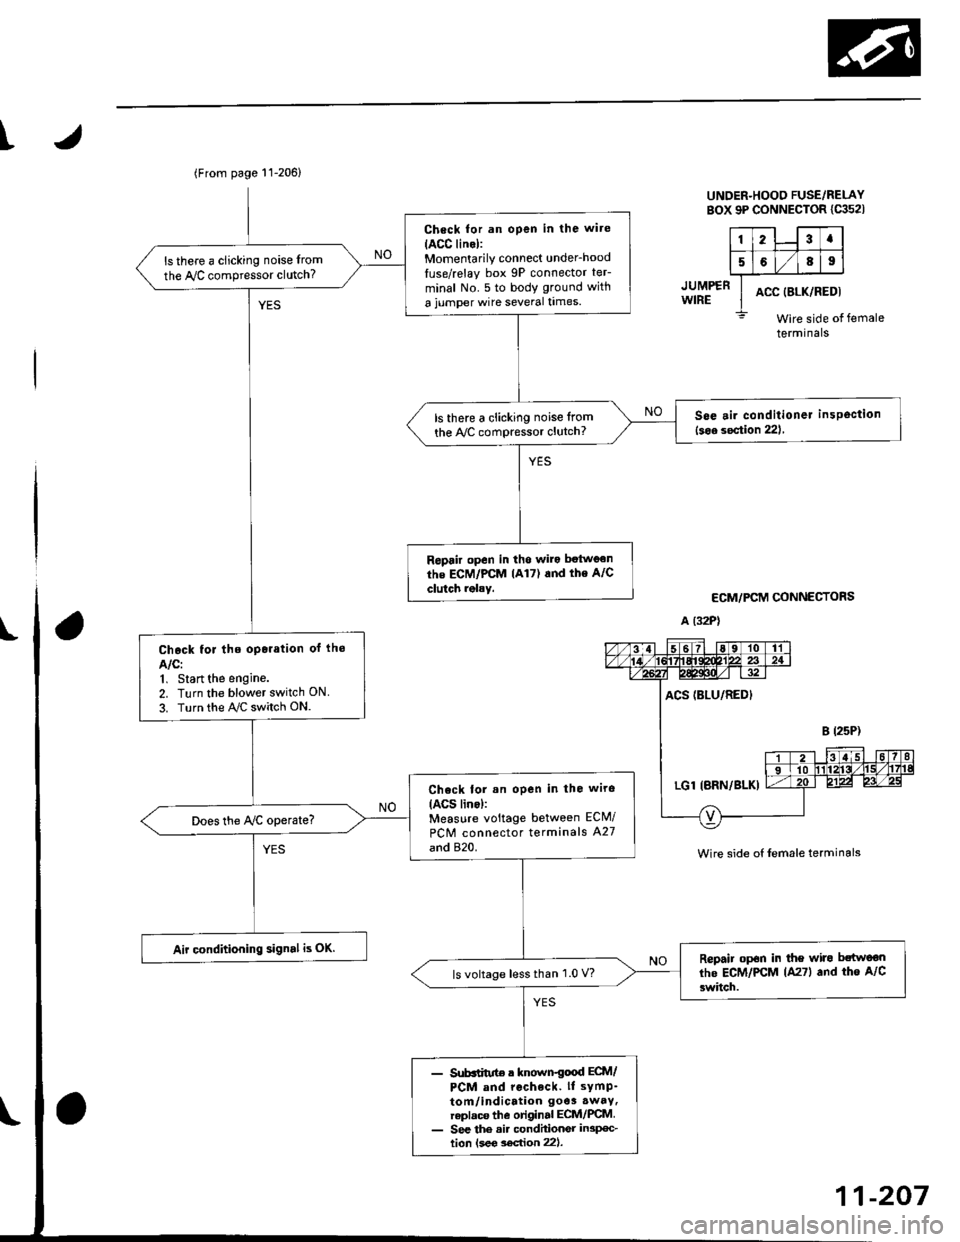 HONDA CIVIC 1997 6.G Workshop Manual I
JUMP€RWIRE
UNDER-HOOO FUSE/RELAYsox 9P coNNEcroR lca52l
123a
5689
ACC (8LK/REDI
Wire side ofterminals
ECM/PCM CONNECTORS
A (32P1
female
Wire side of {emale terminals
(From page 11-206)
Check for a